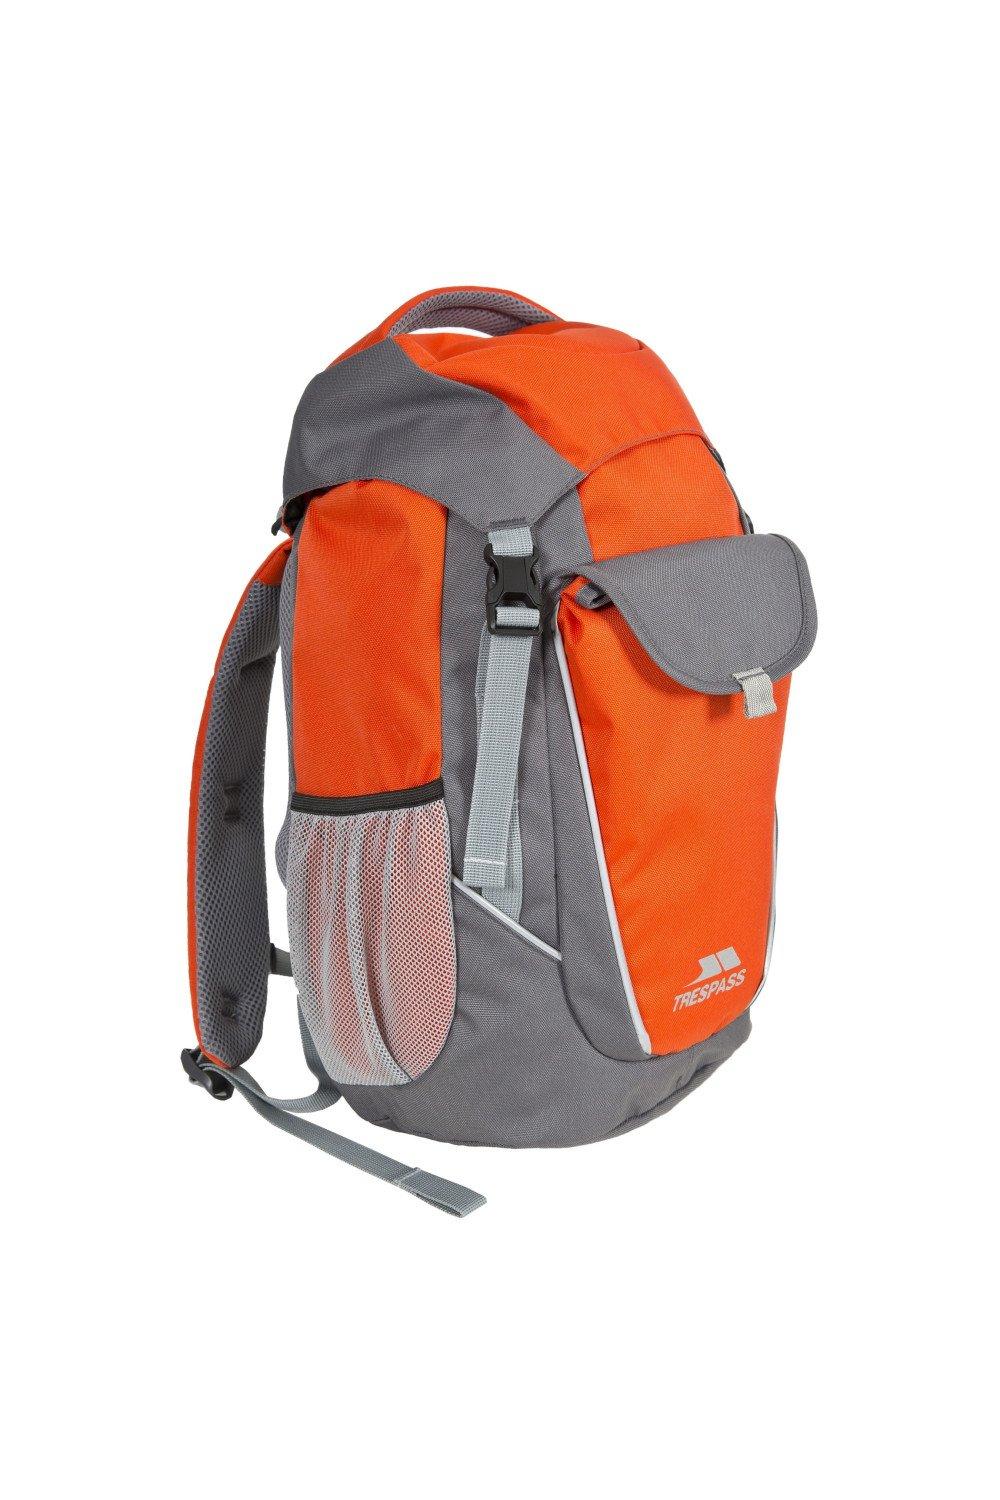 Buzzard Backpack Rucksack (18 Litre)